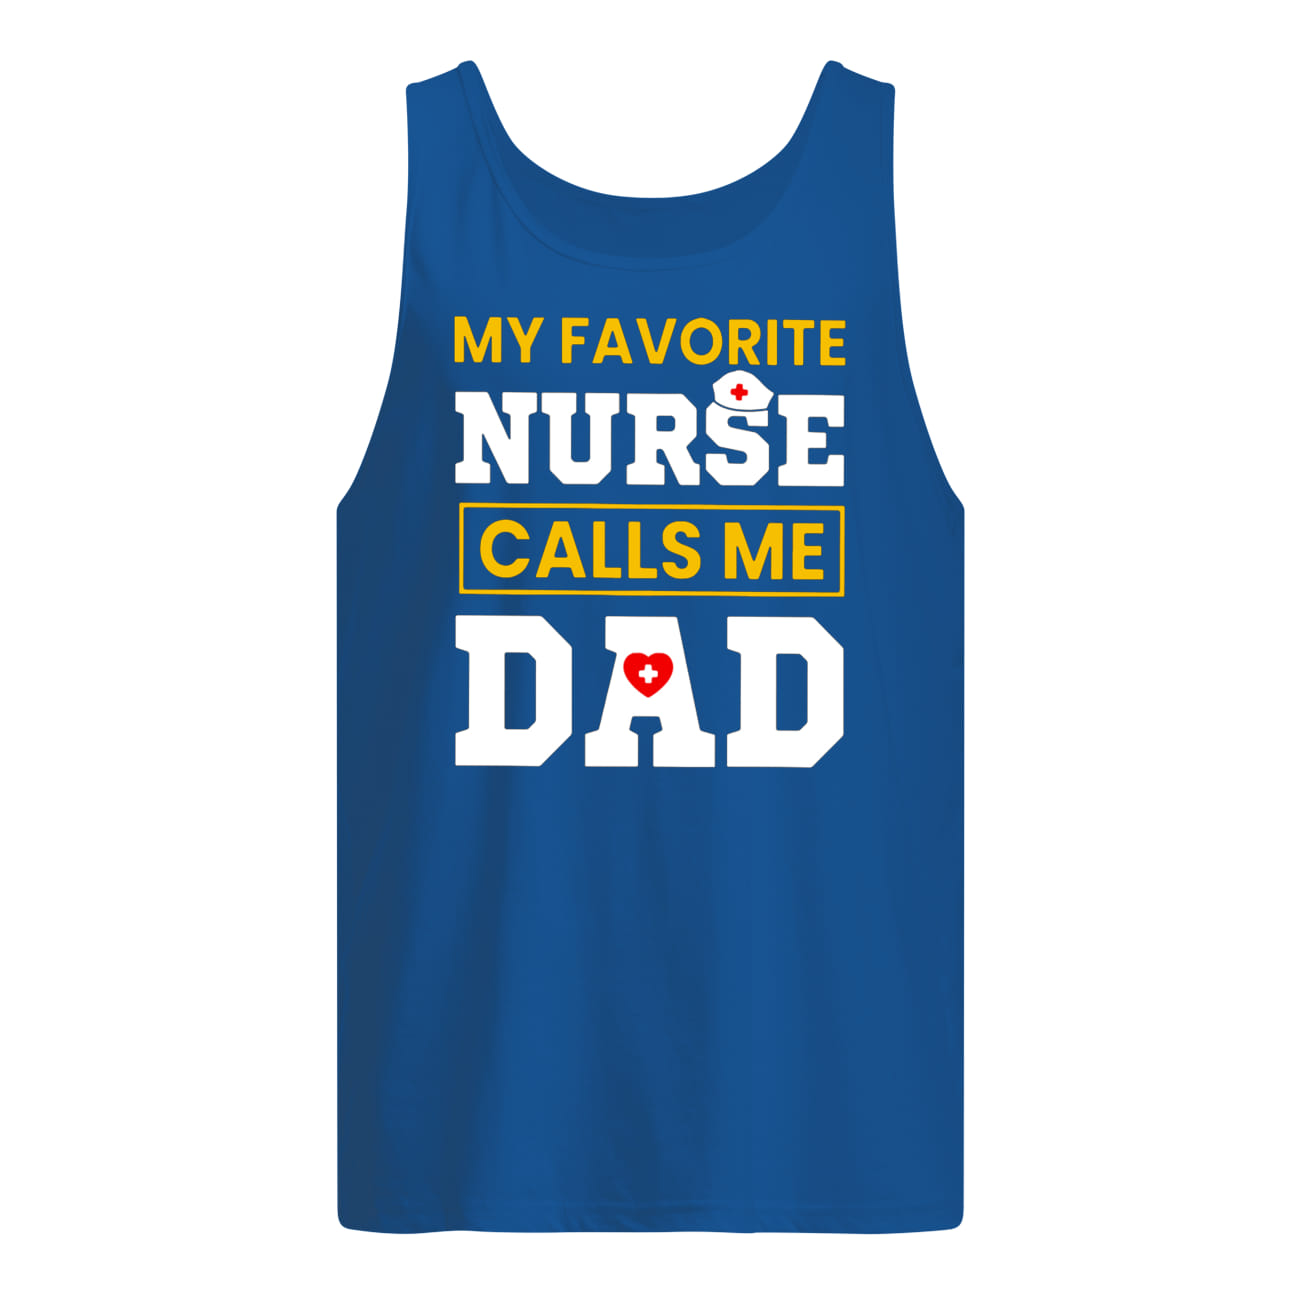 My favorite nurse calls me dad tank top